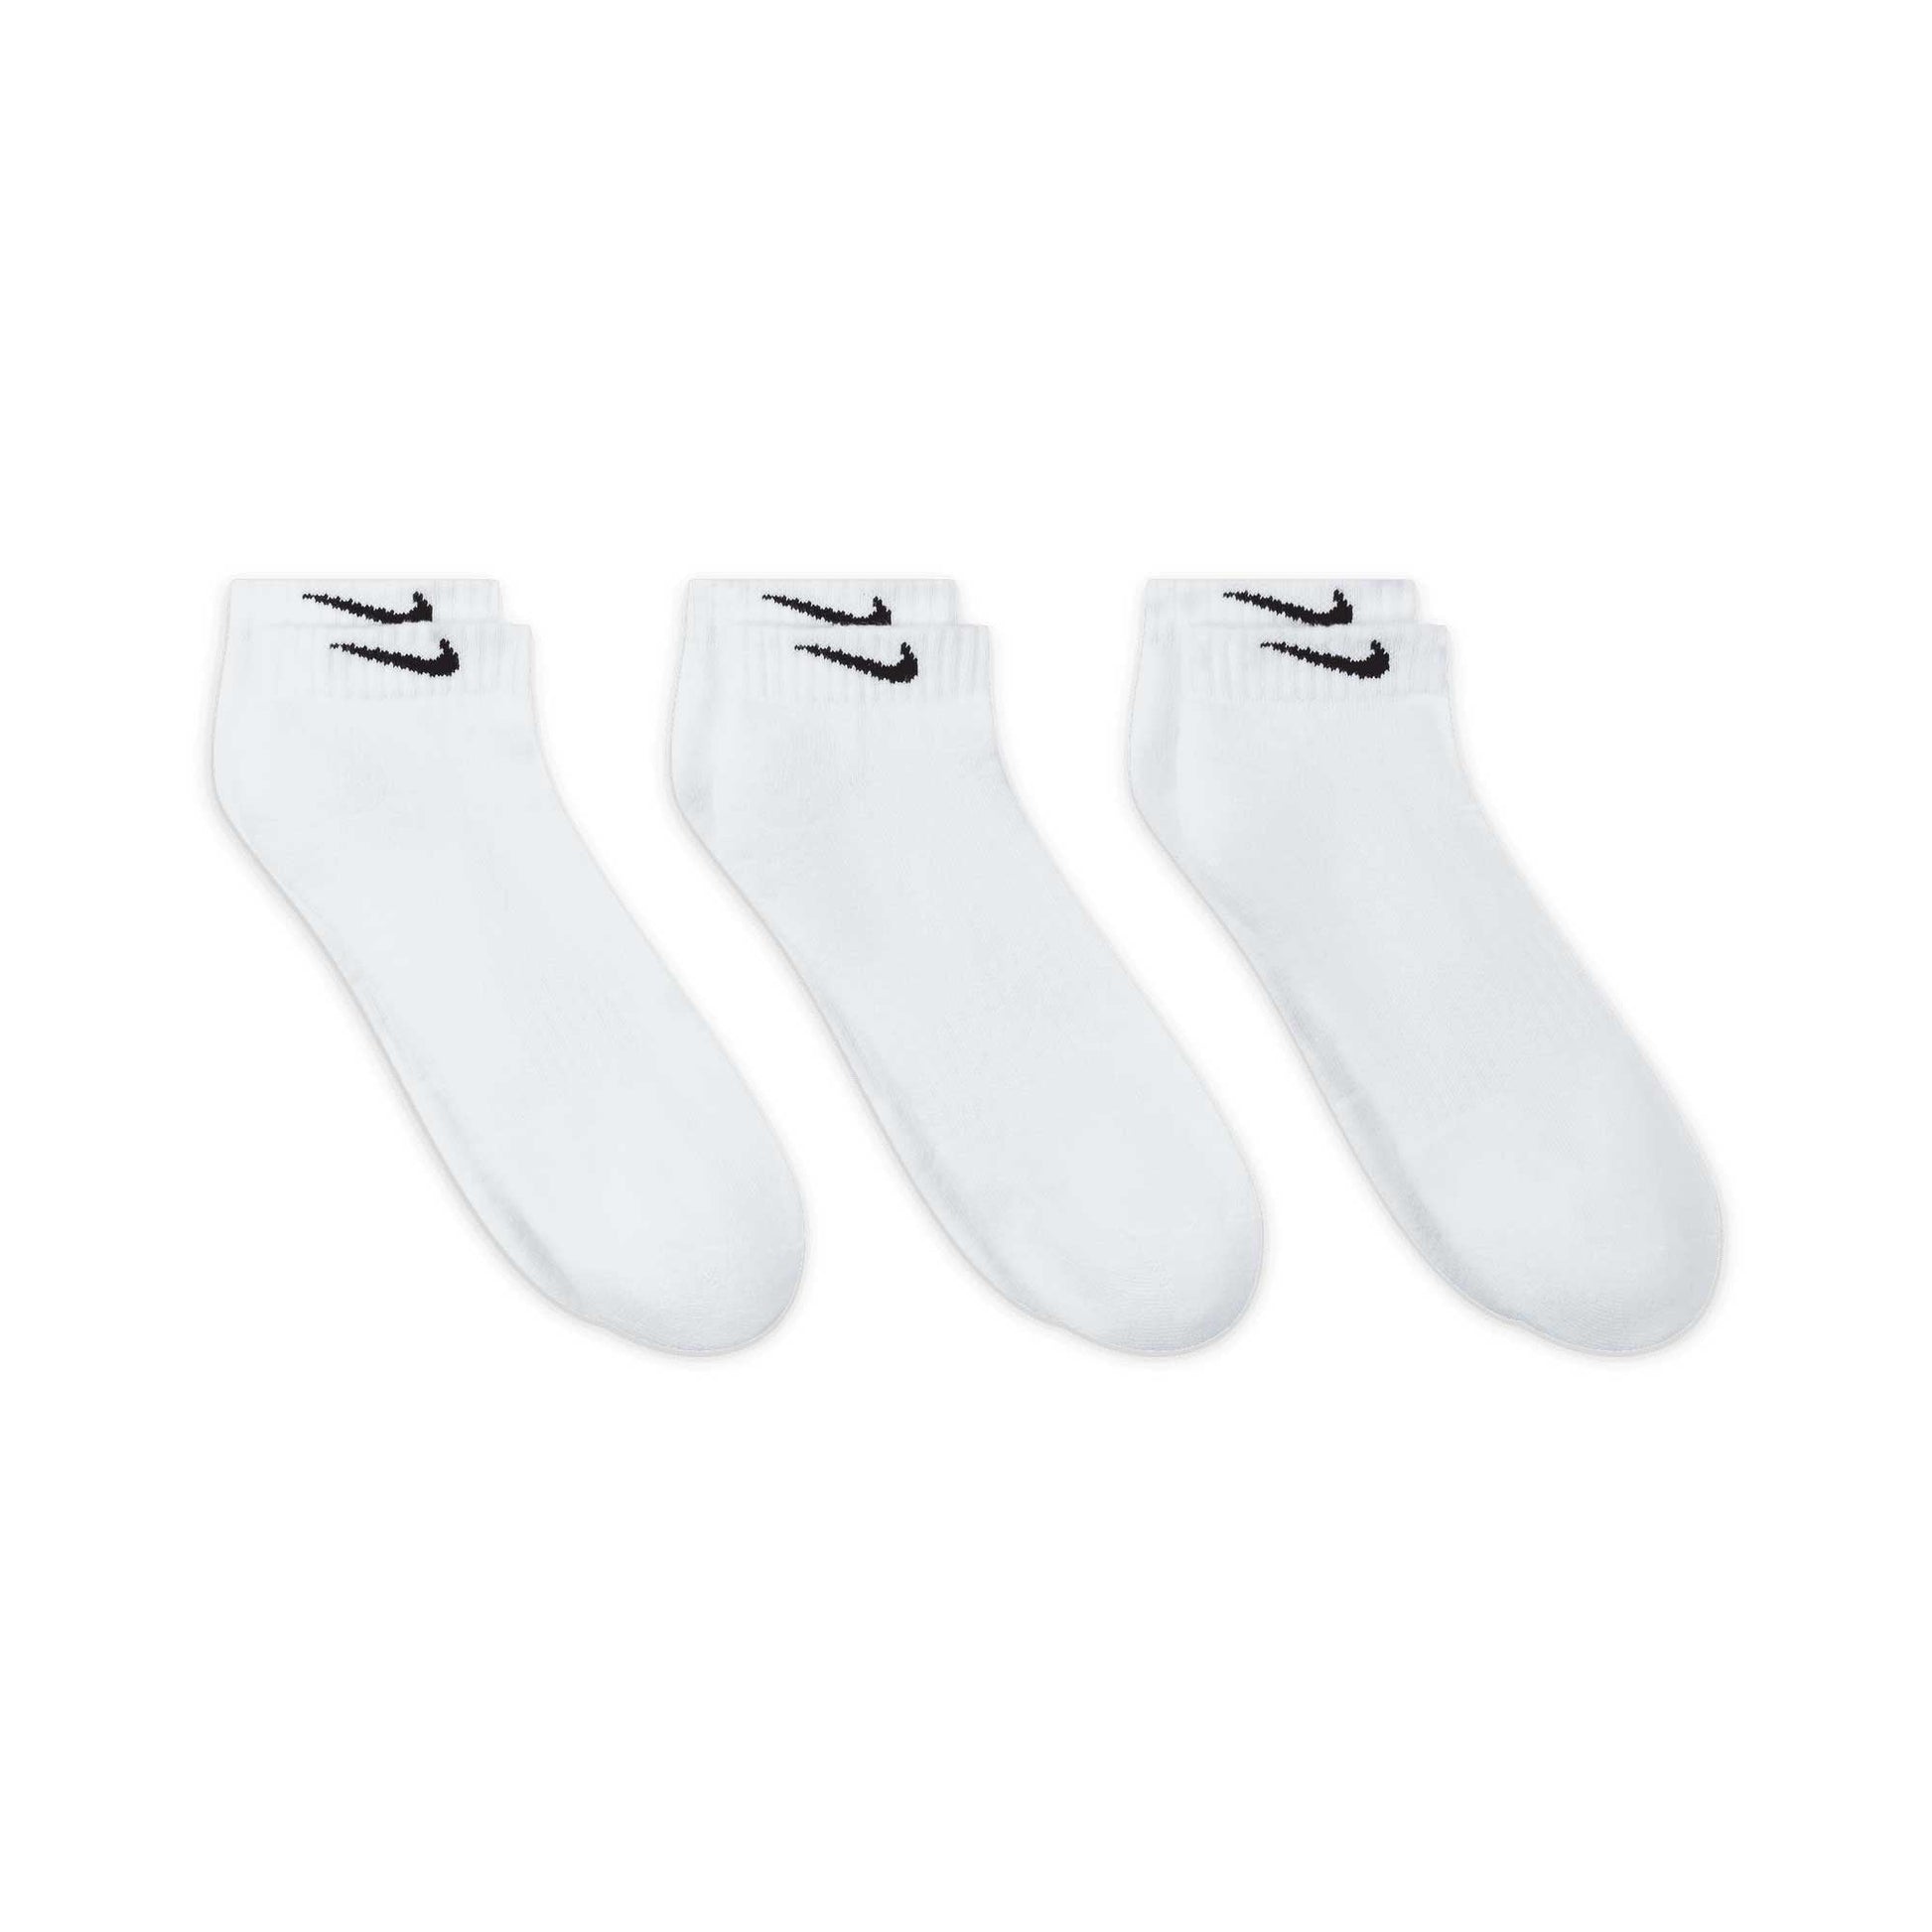 Nike SB Nike Everyday Cushioned Socks (3-Pack), white/black, white/black - Tiki Room Skateboards - 4